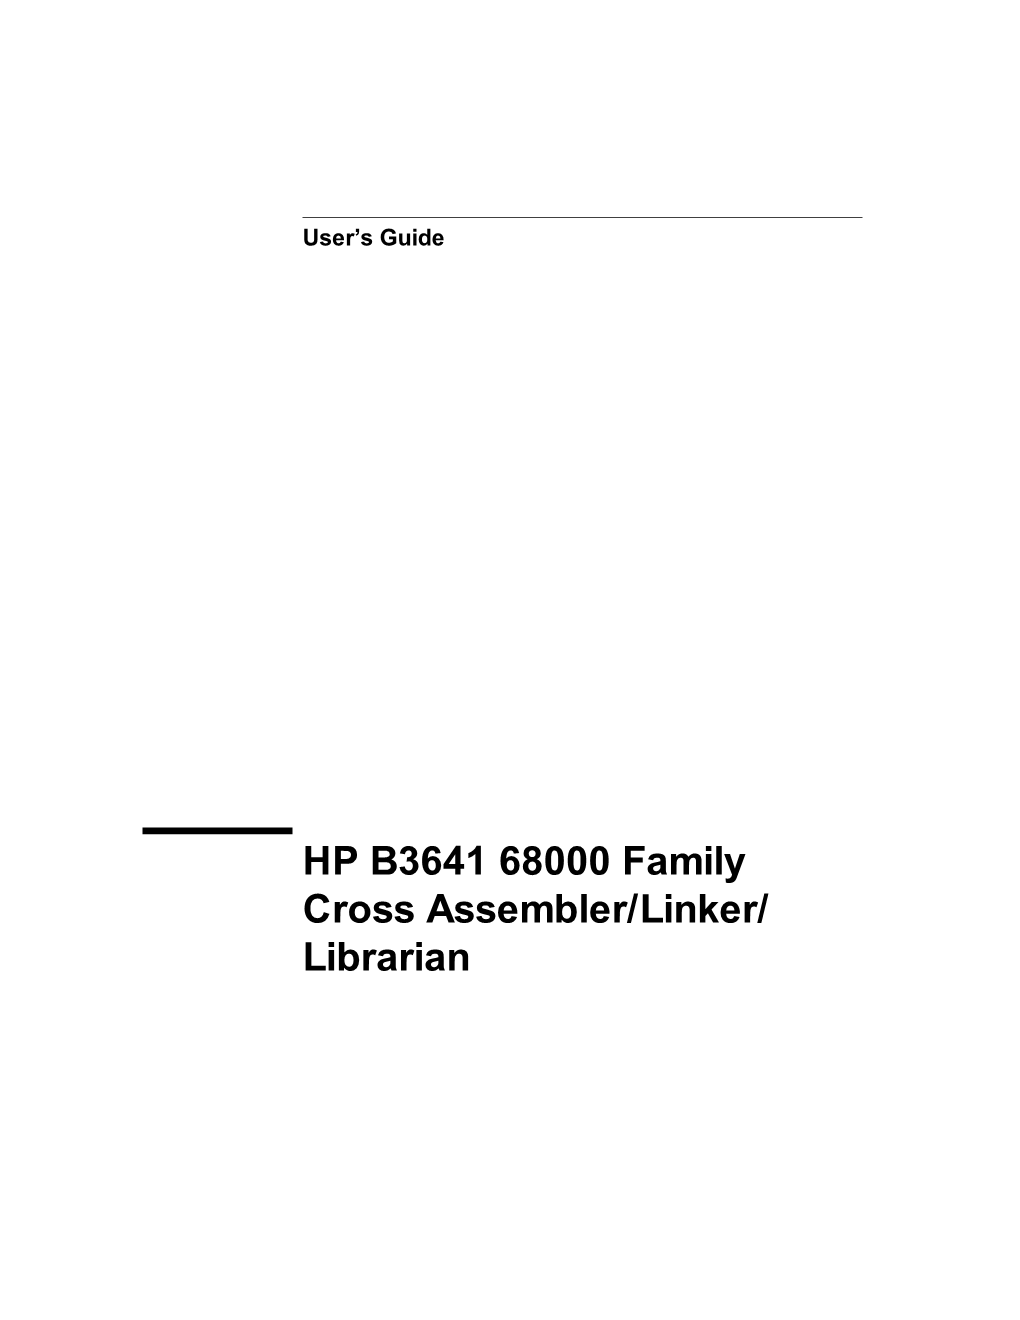 HP B3641 68000 Family Cross Assembler/Linker/ Librarian Notice